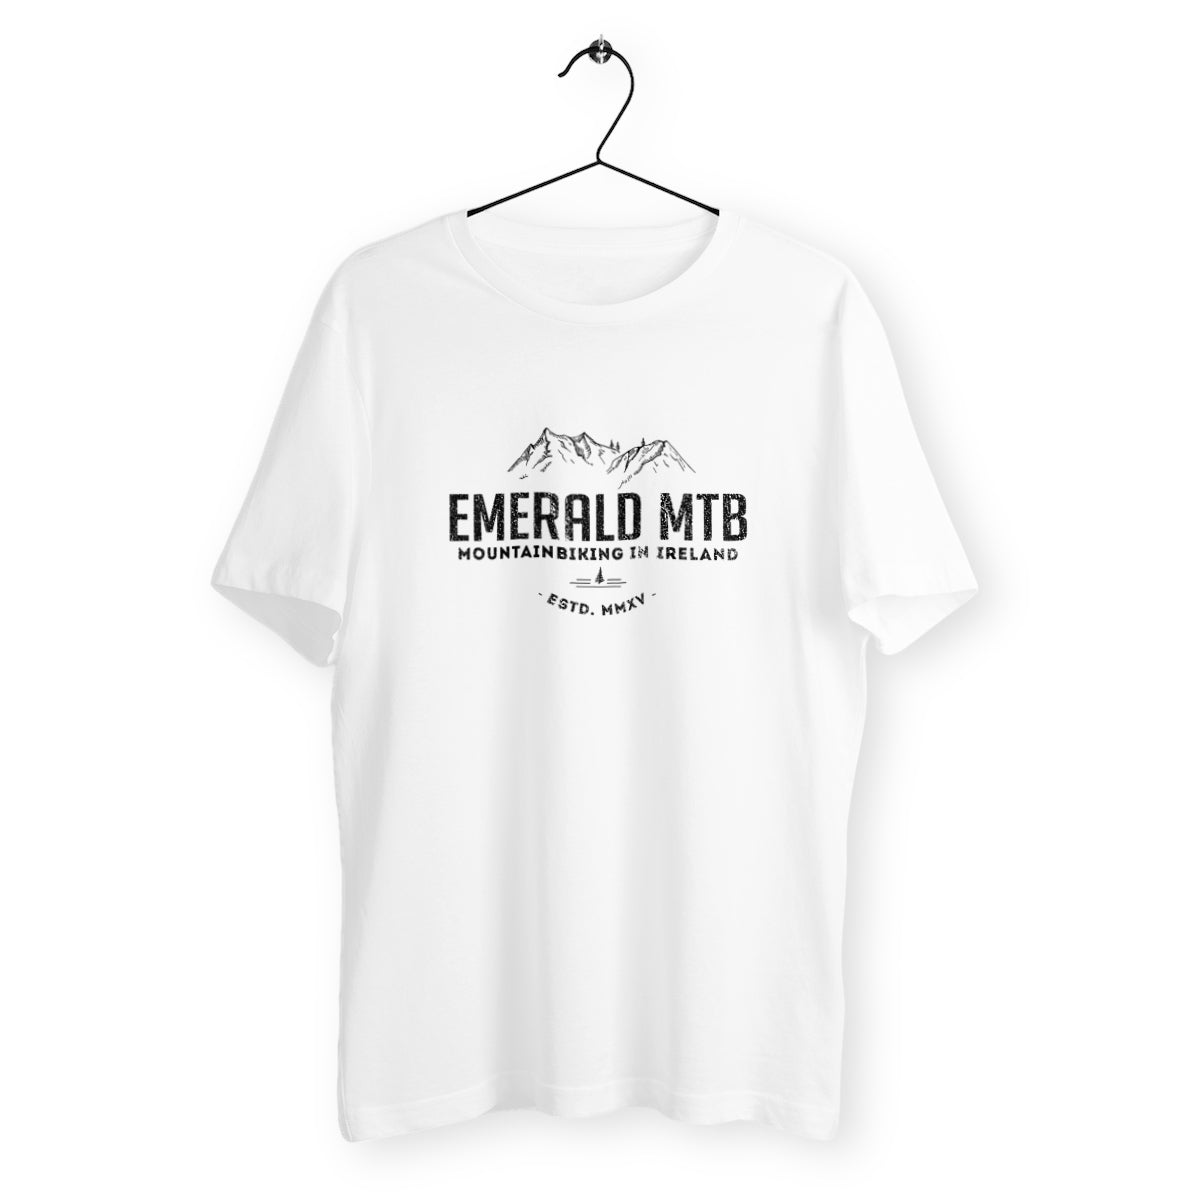 Emerald MTB T-Shirt black logo